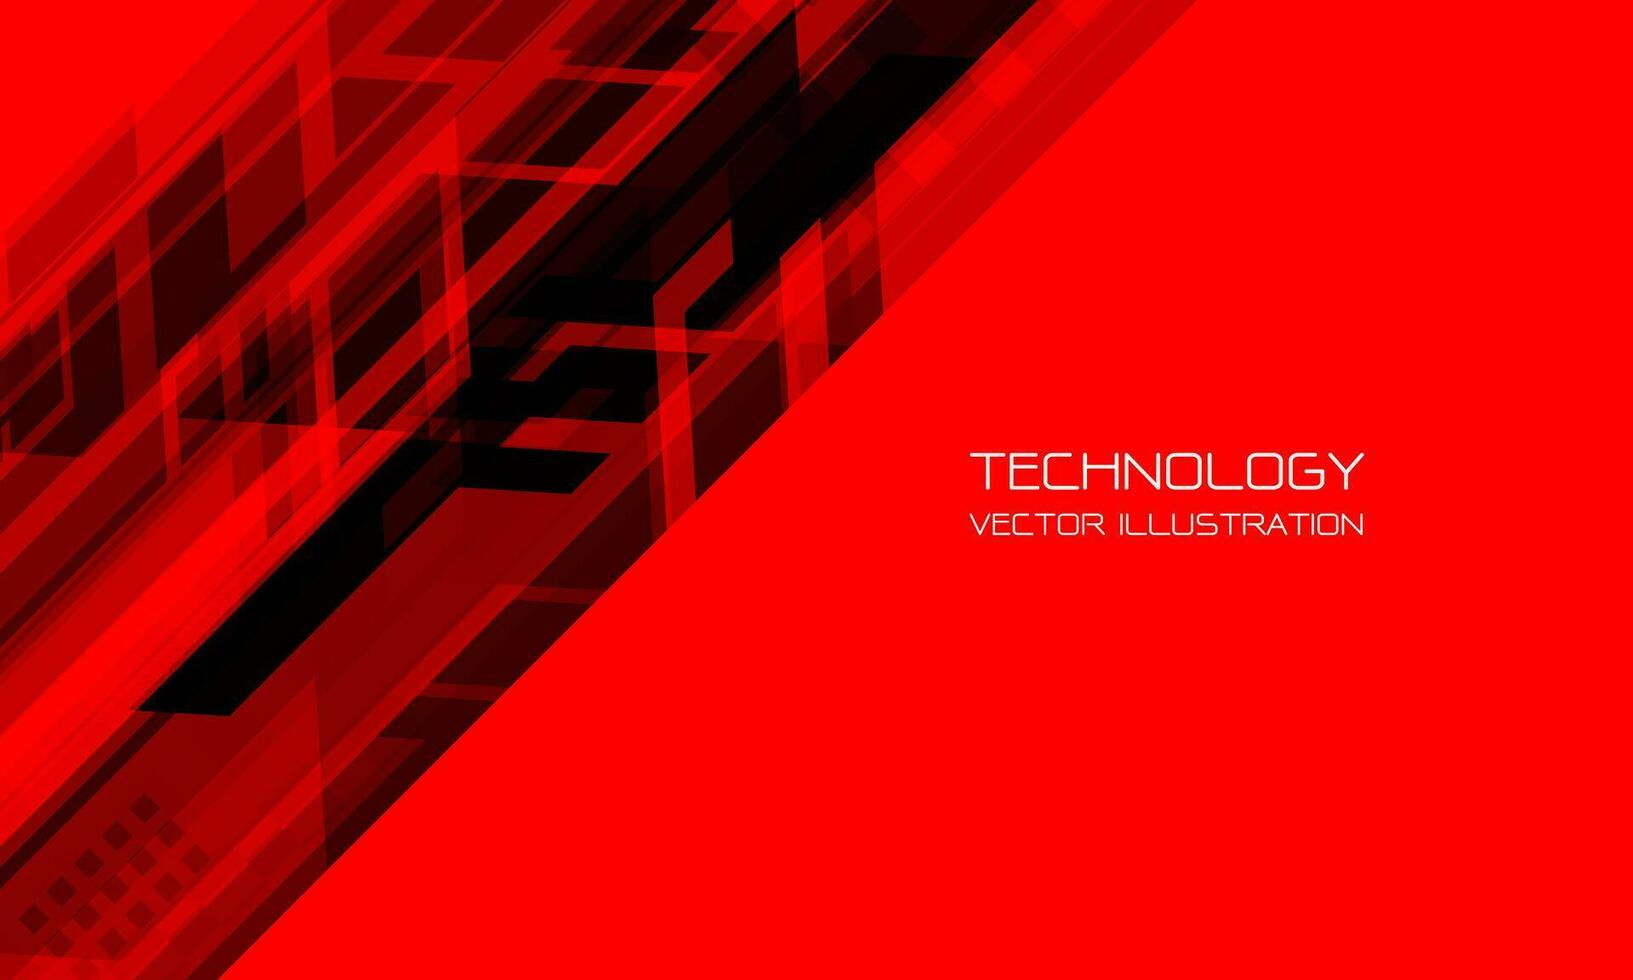 abstrakt svart geometrisk dynamisk hastighet teknologi trogen design på röd bakgrund vektor